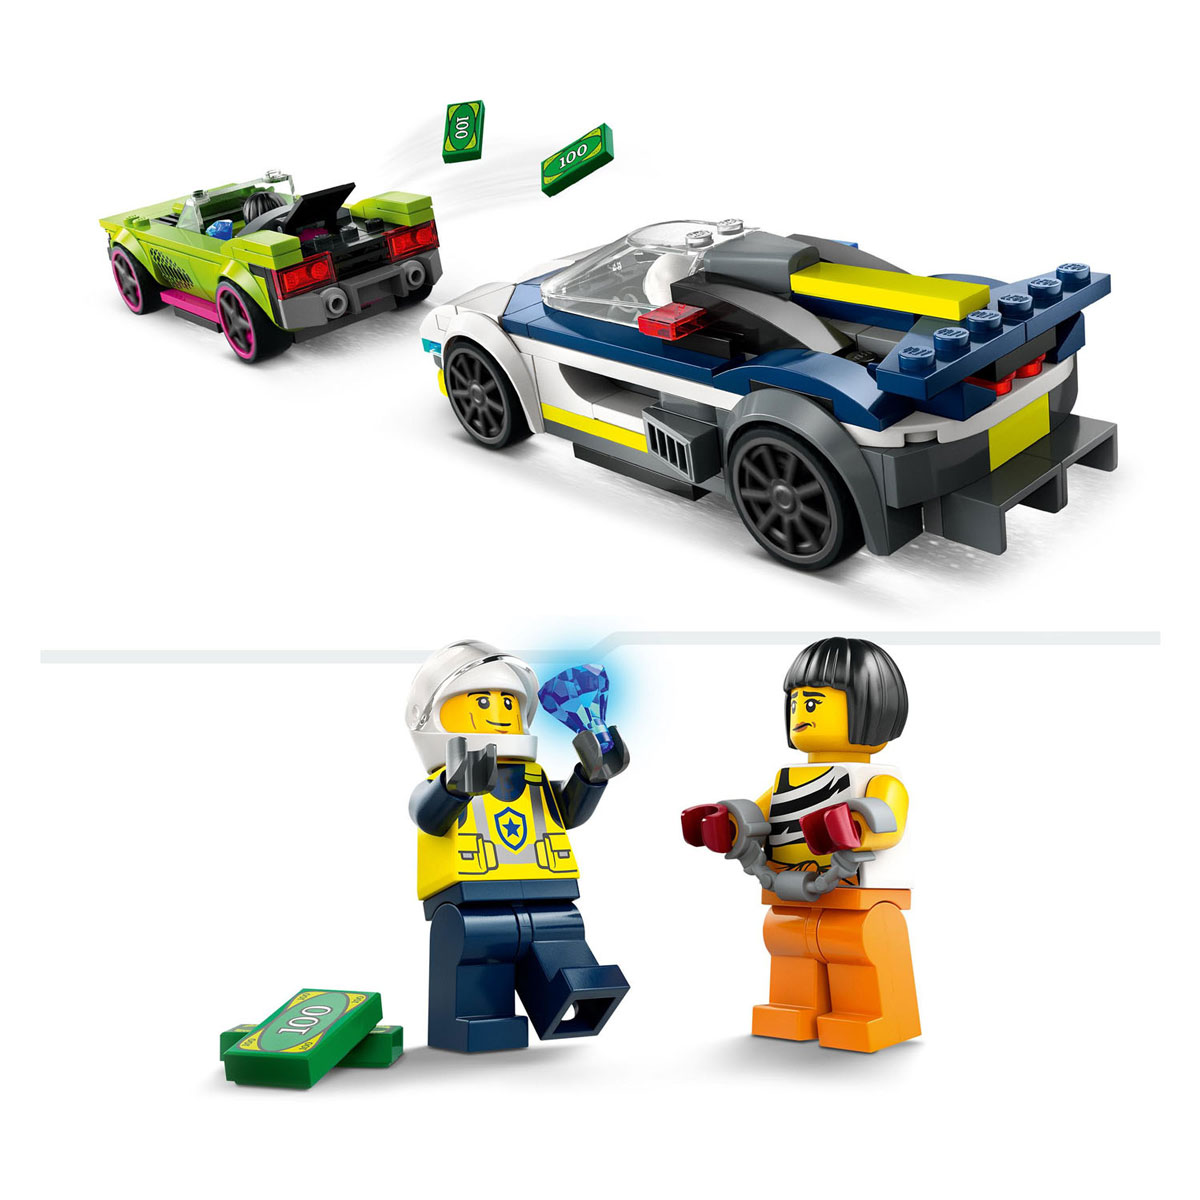 LEGO City 60415 Politiewagen en Snelle Autoachtervolging